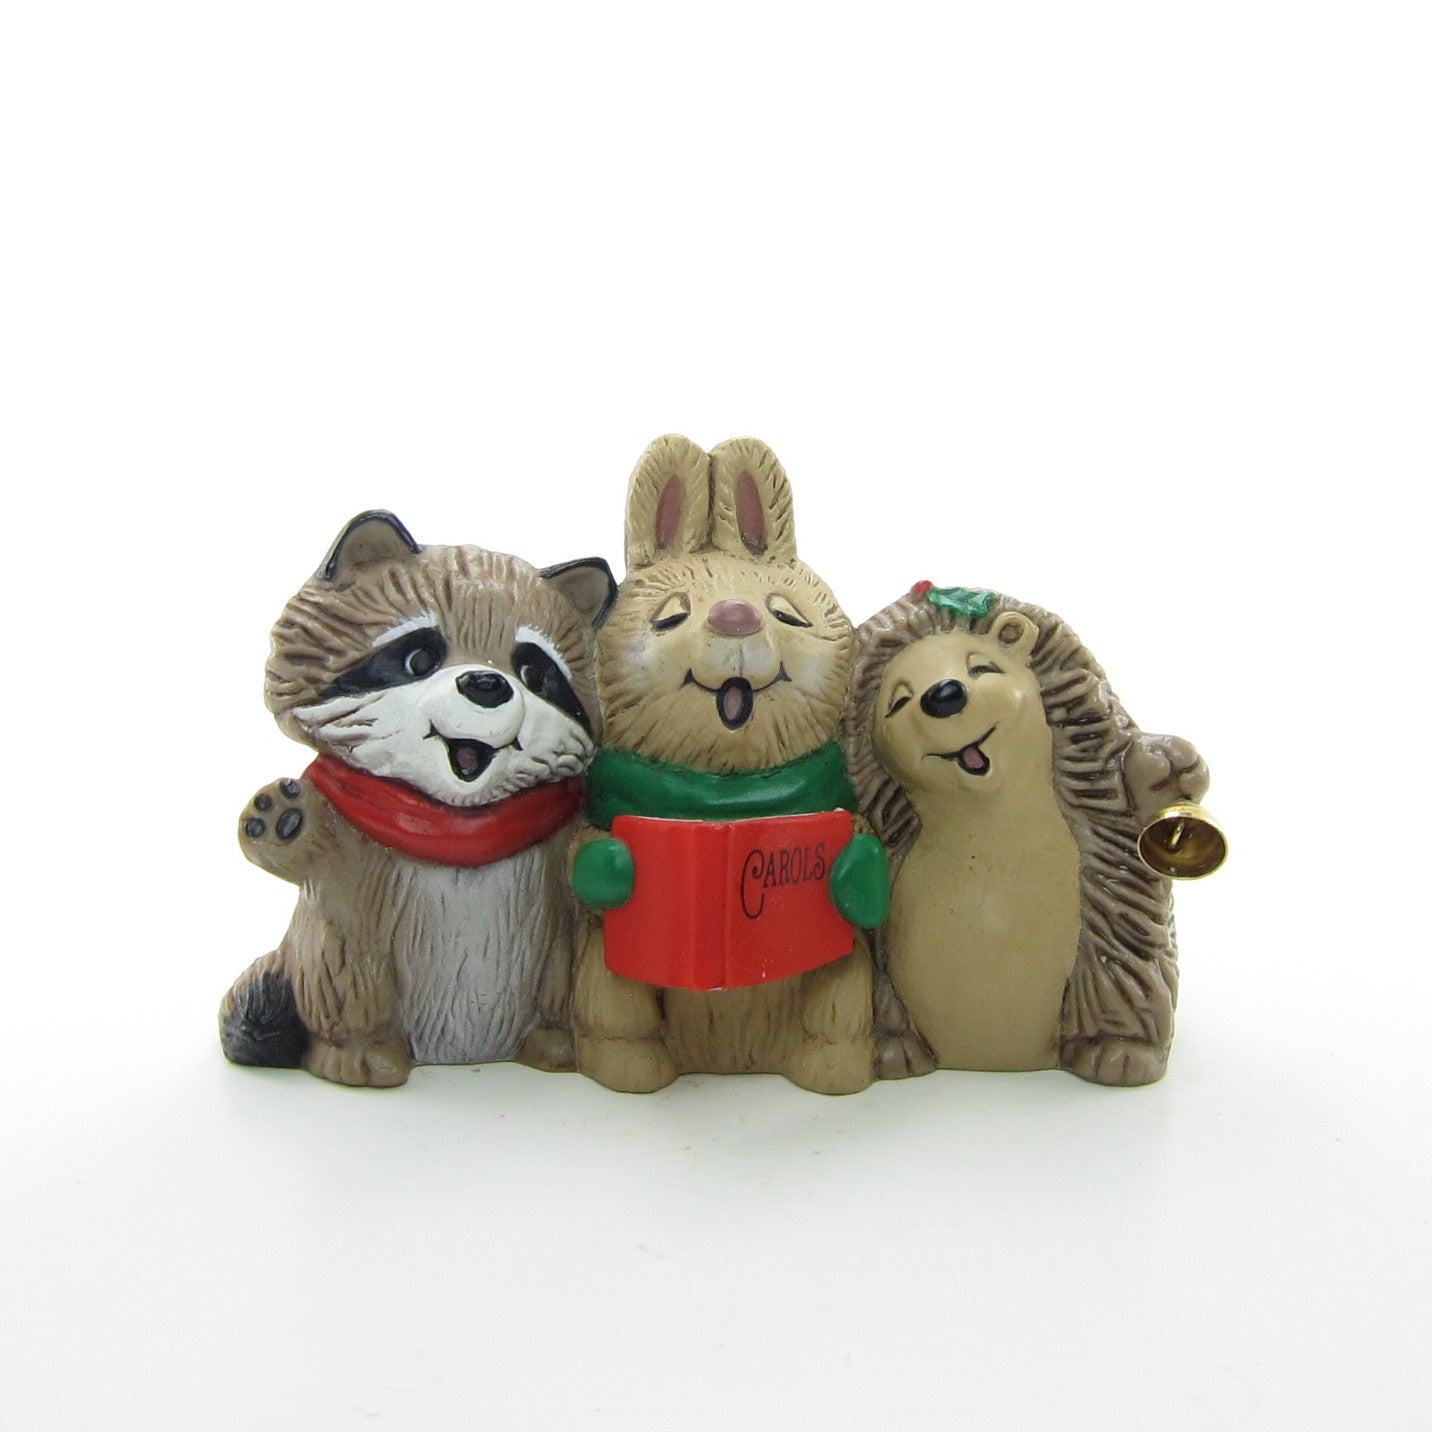 Hallmark Merry Miniatures animals singing Christmas carols figurine